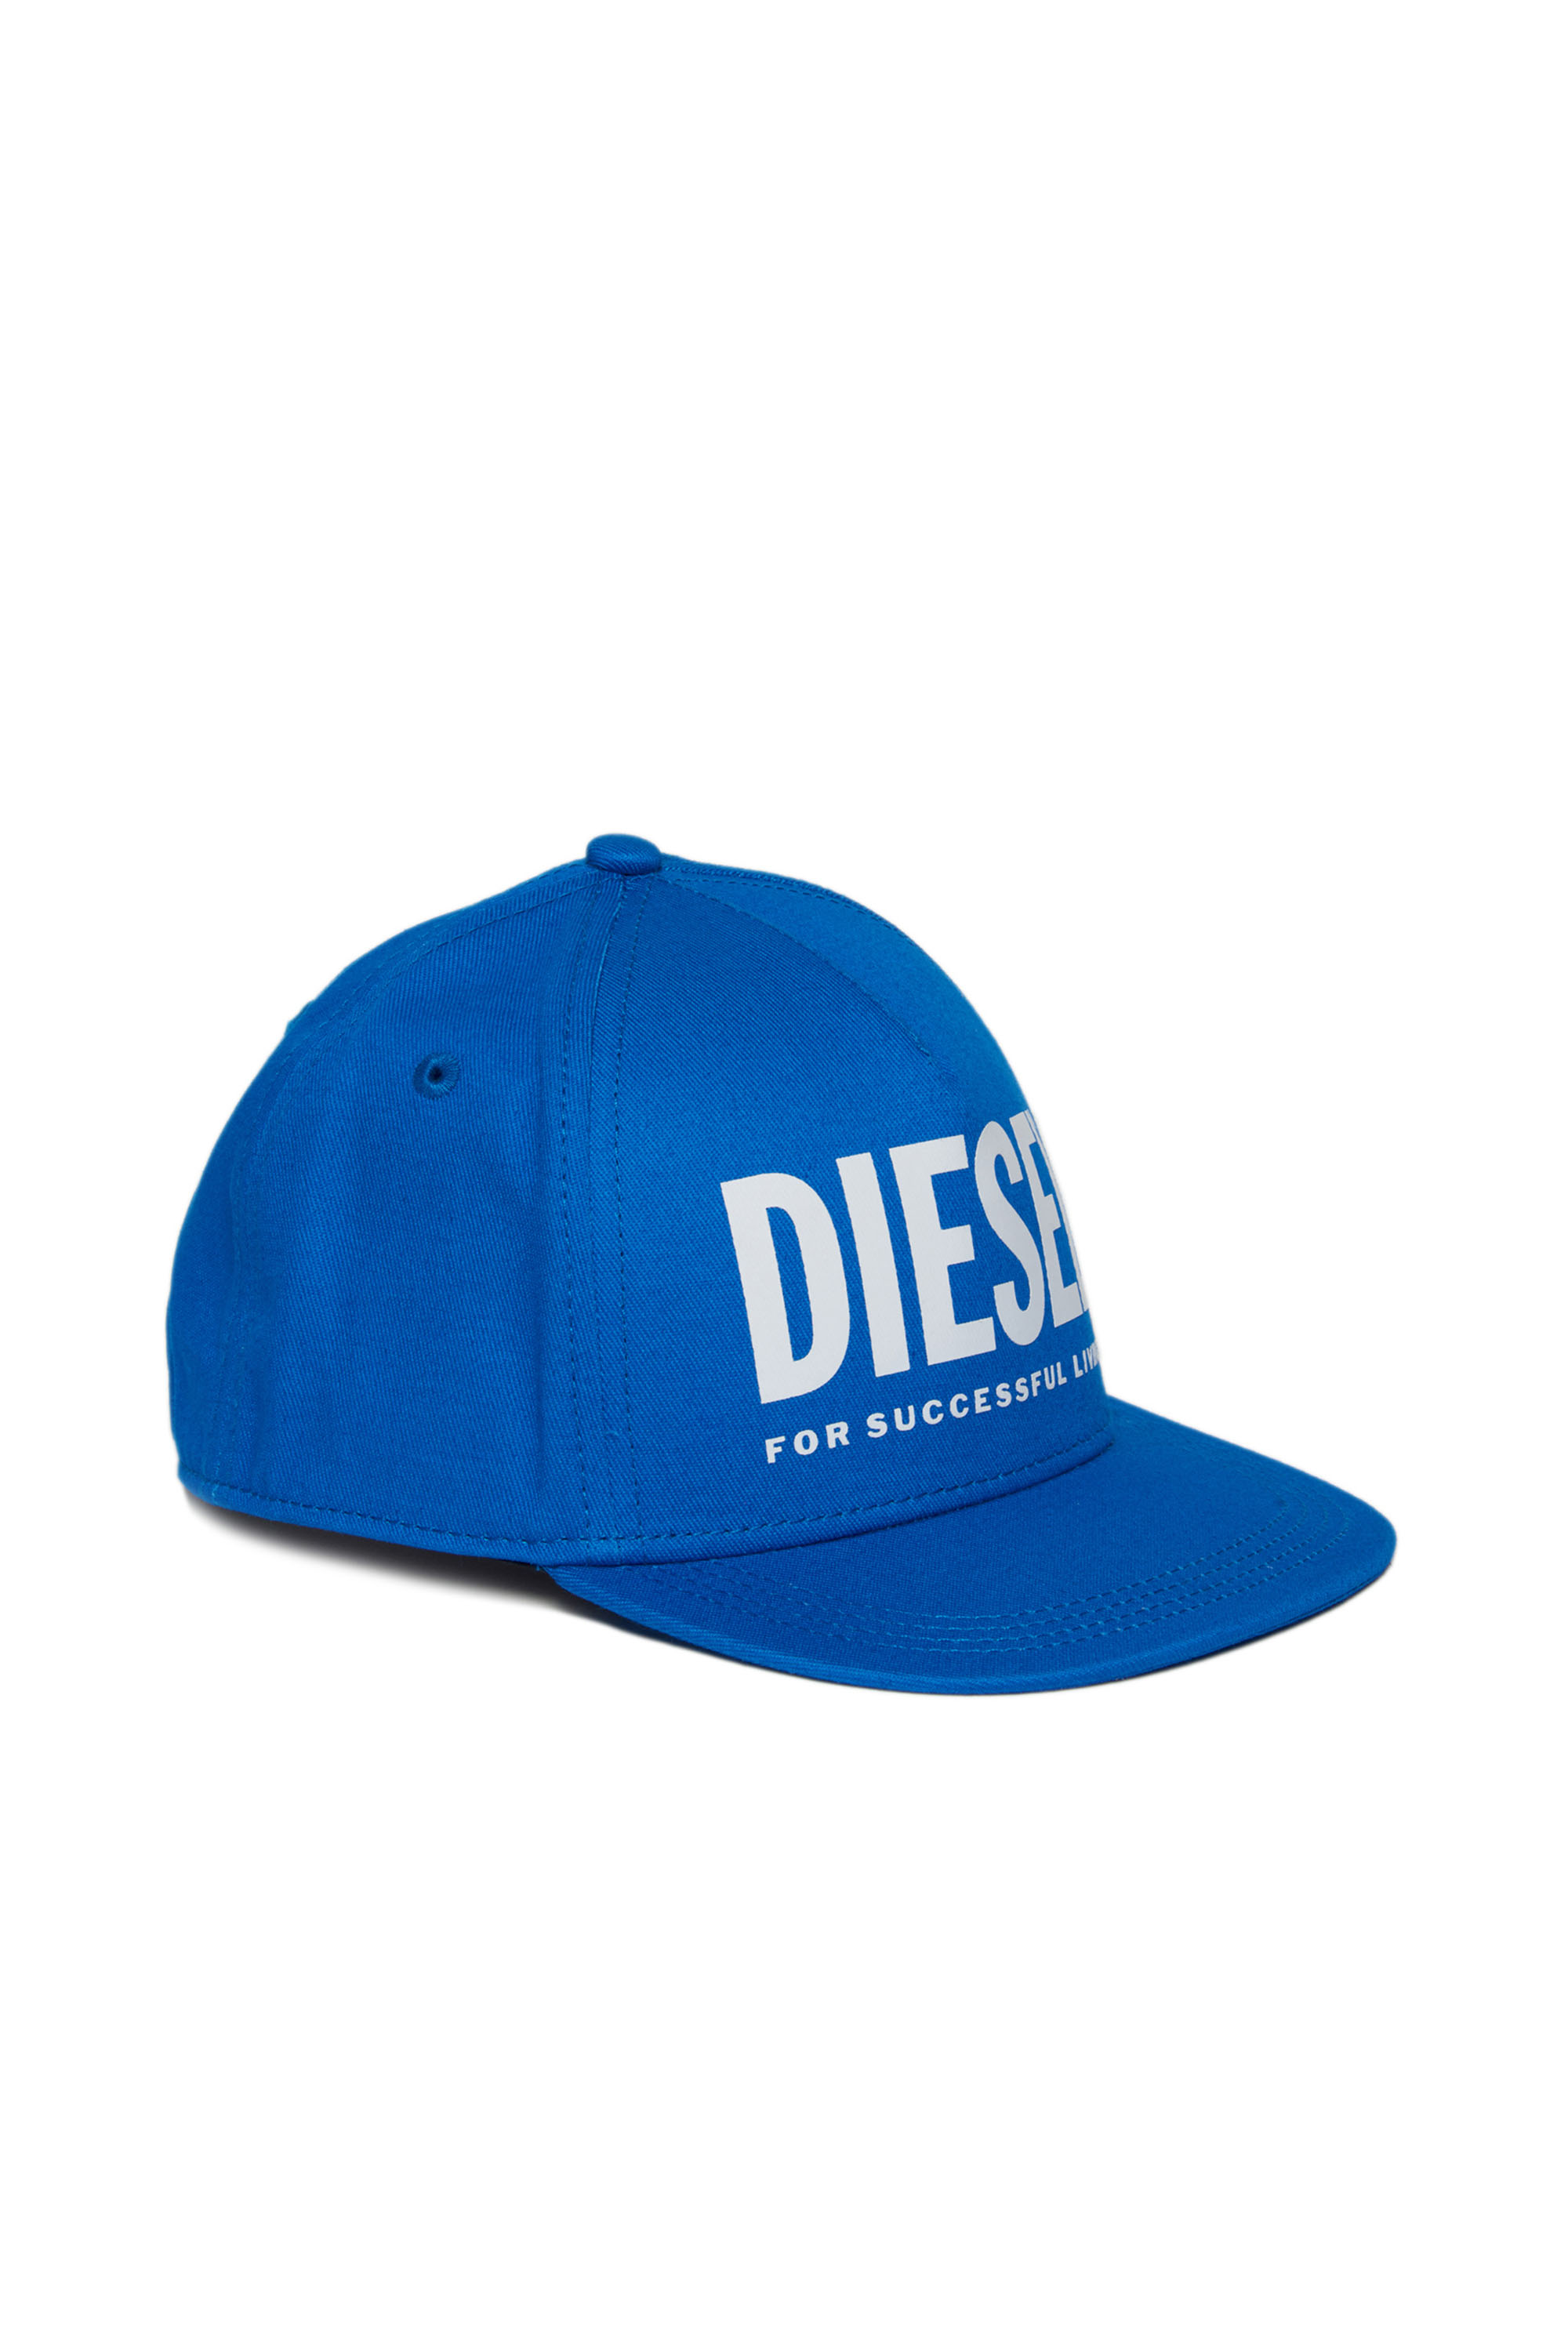 Diesel - FOLLY, Blue - Image 1